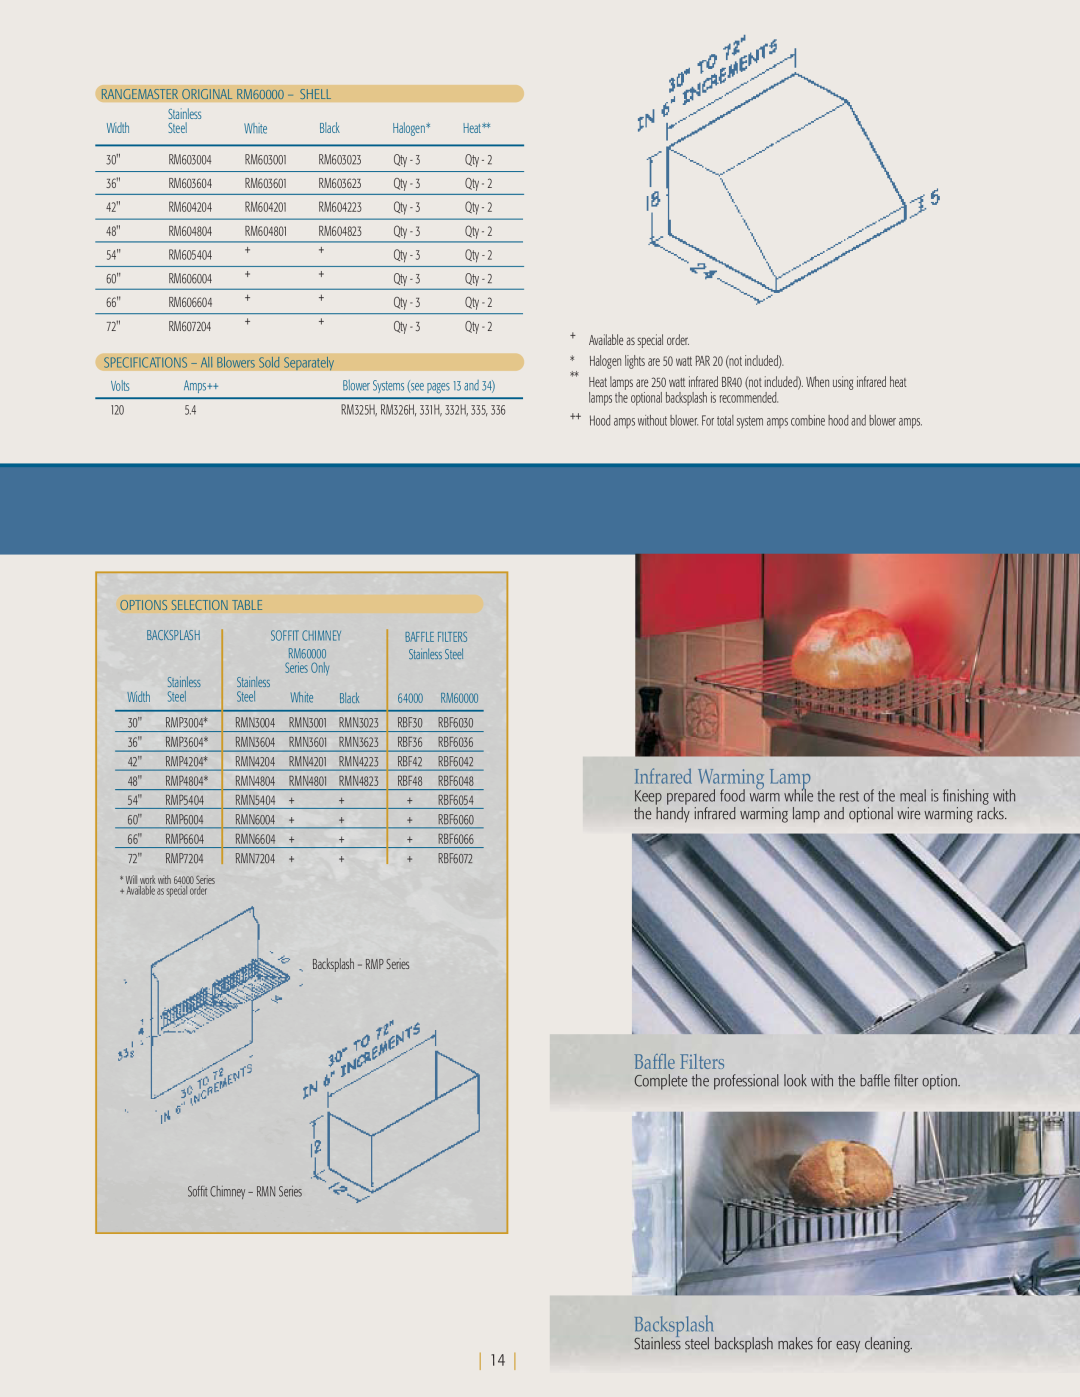 NuTone kitchen ventilation manual Infrared Warming Lamp, Baffle Filters, Backsplash 